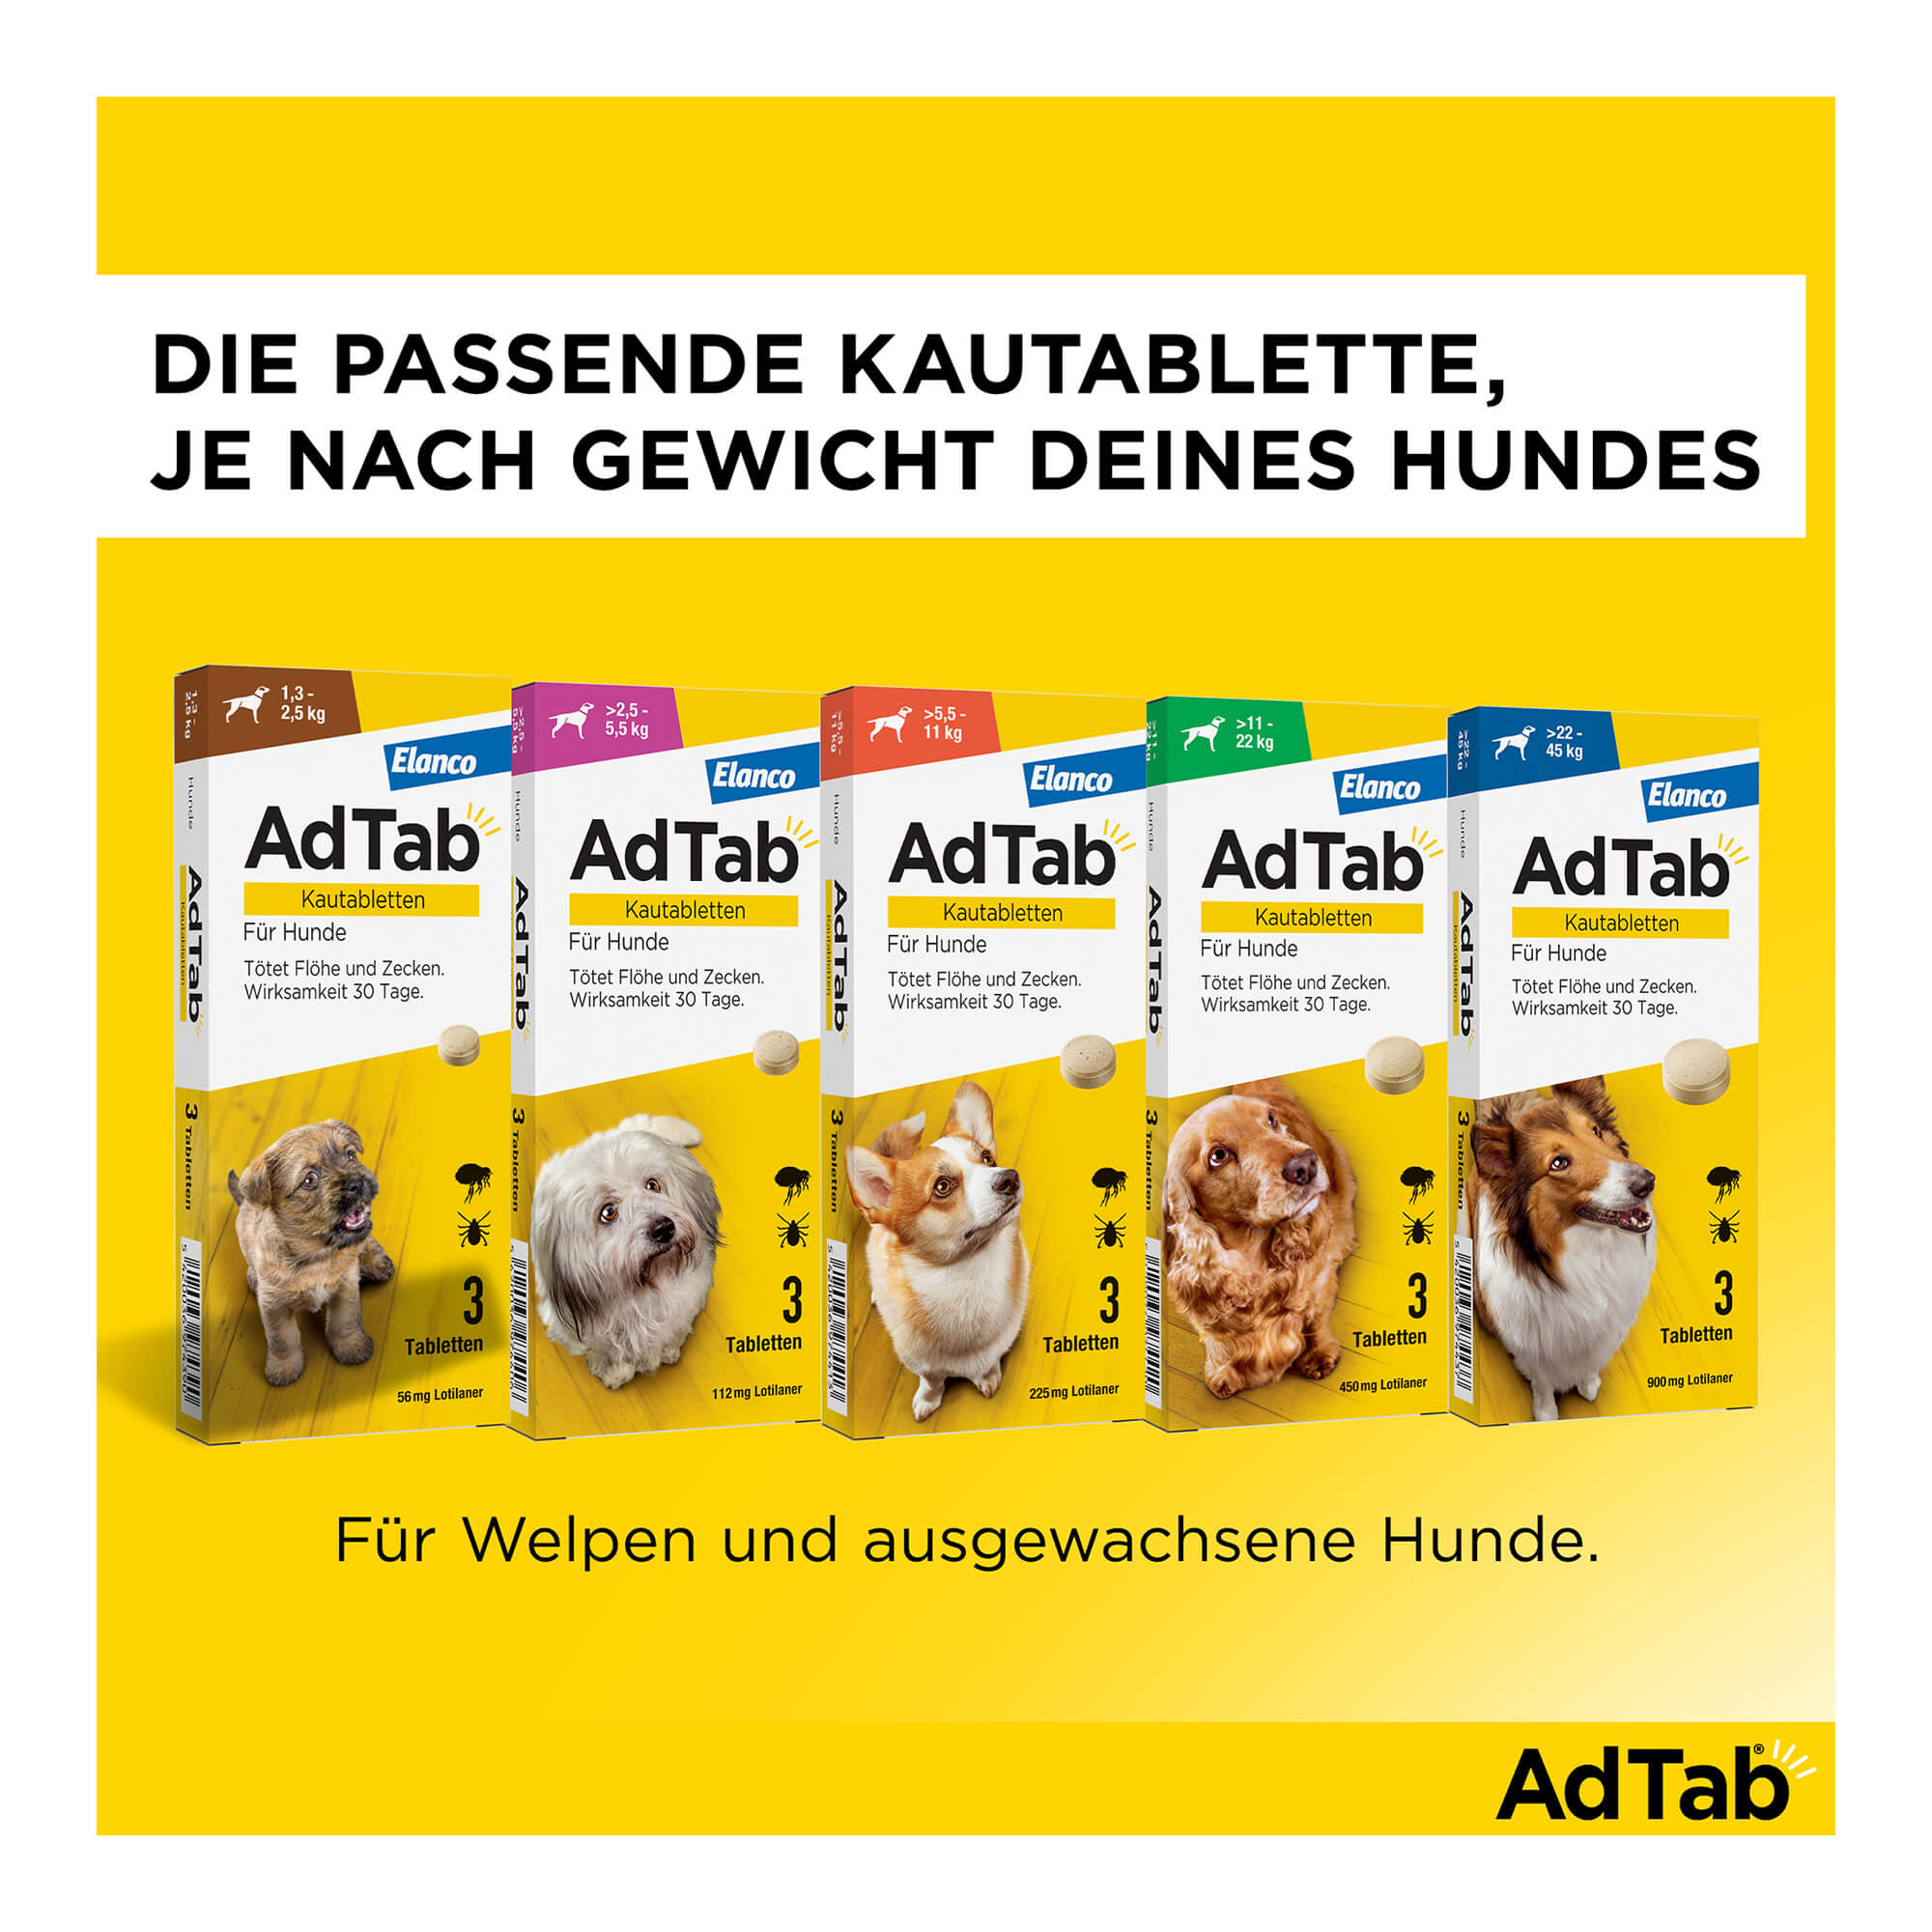 AdTab Kautabletten für Hunde Produktsortiment